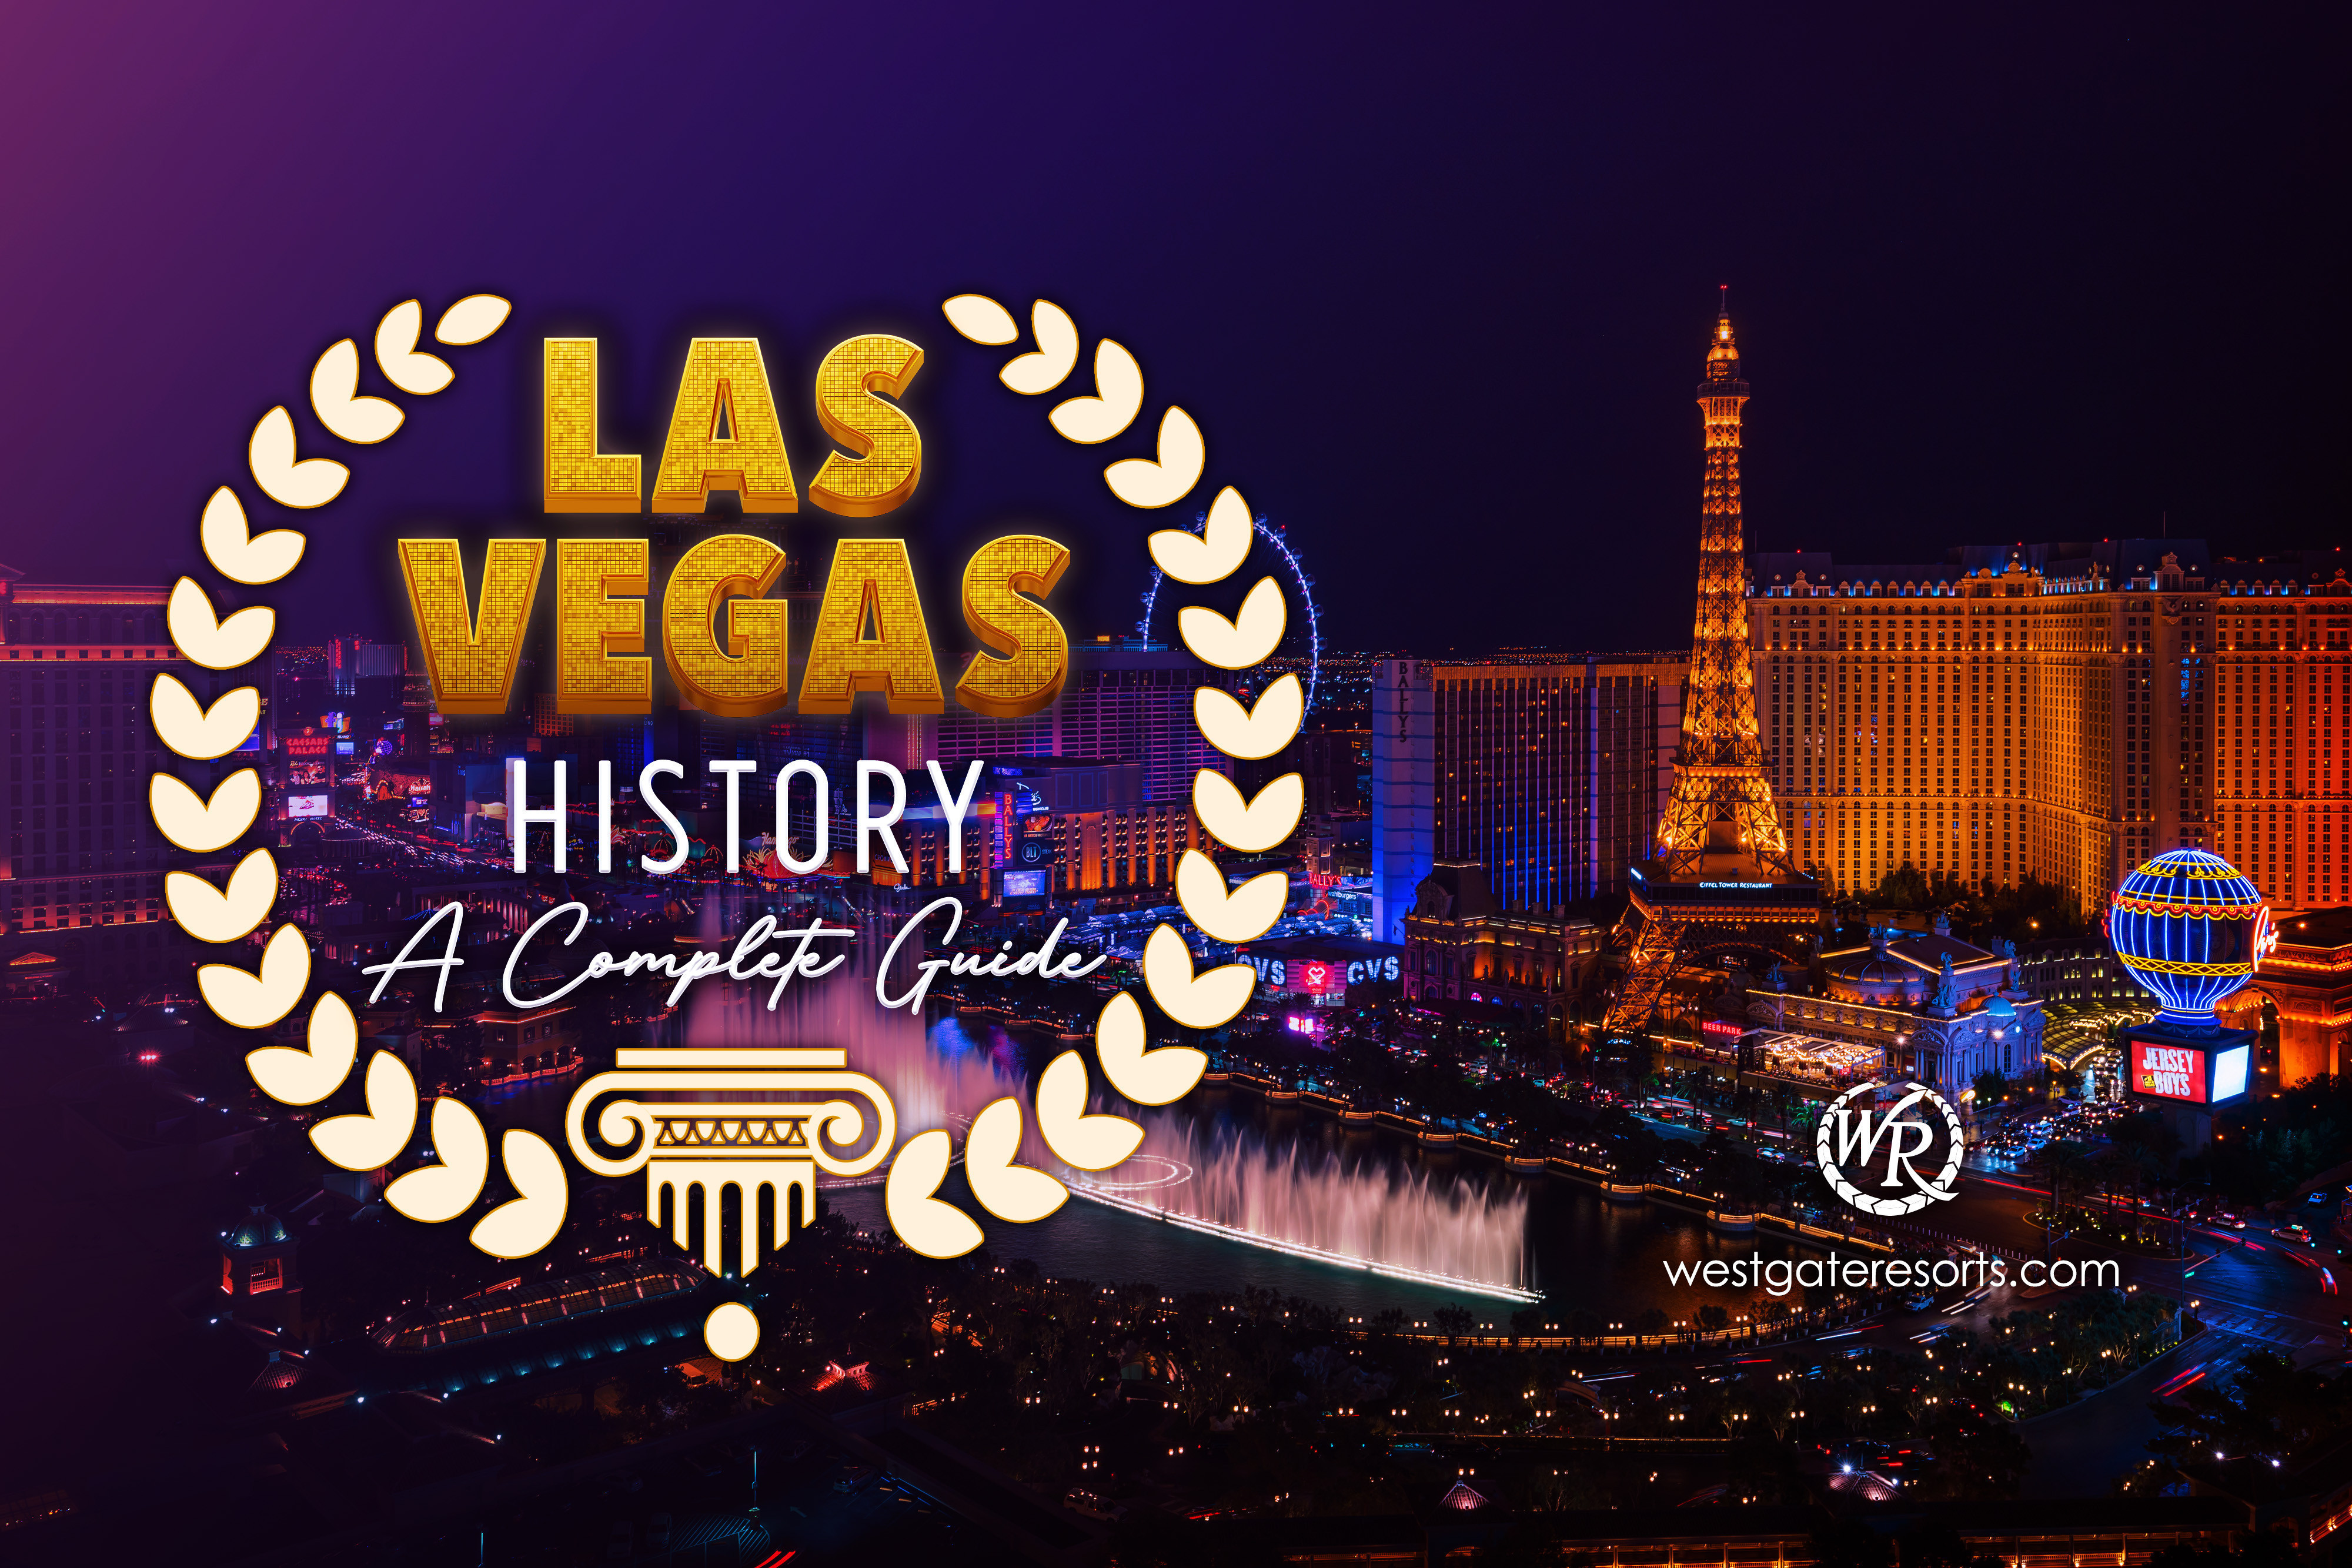 Las Vegas history -Westgate Travel Blog